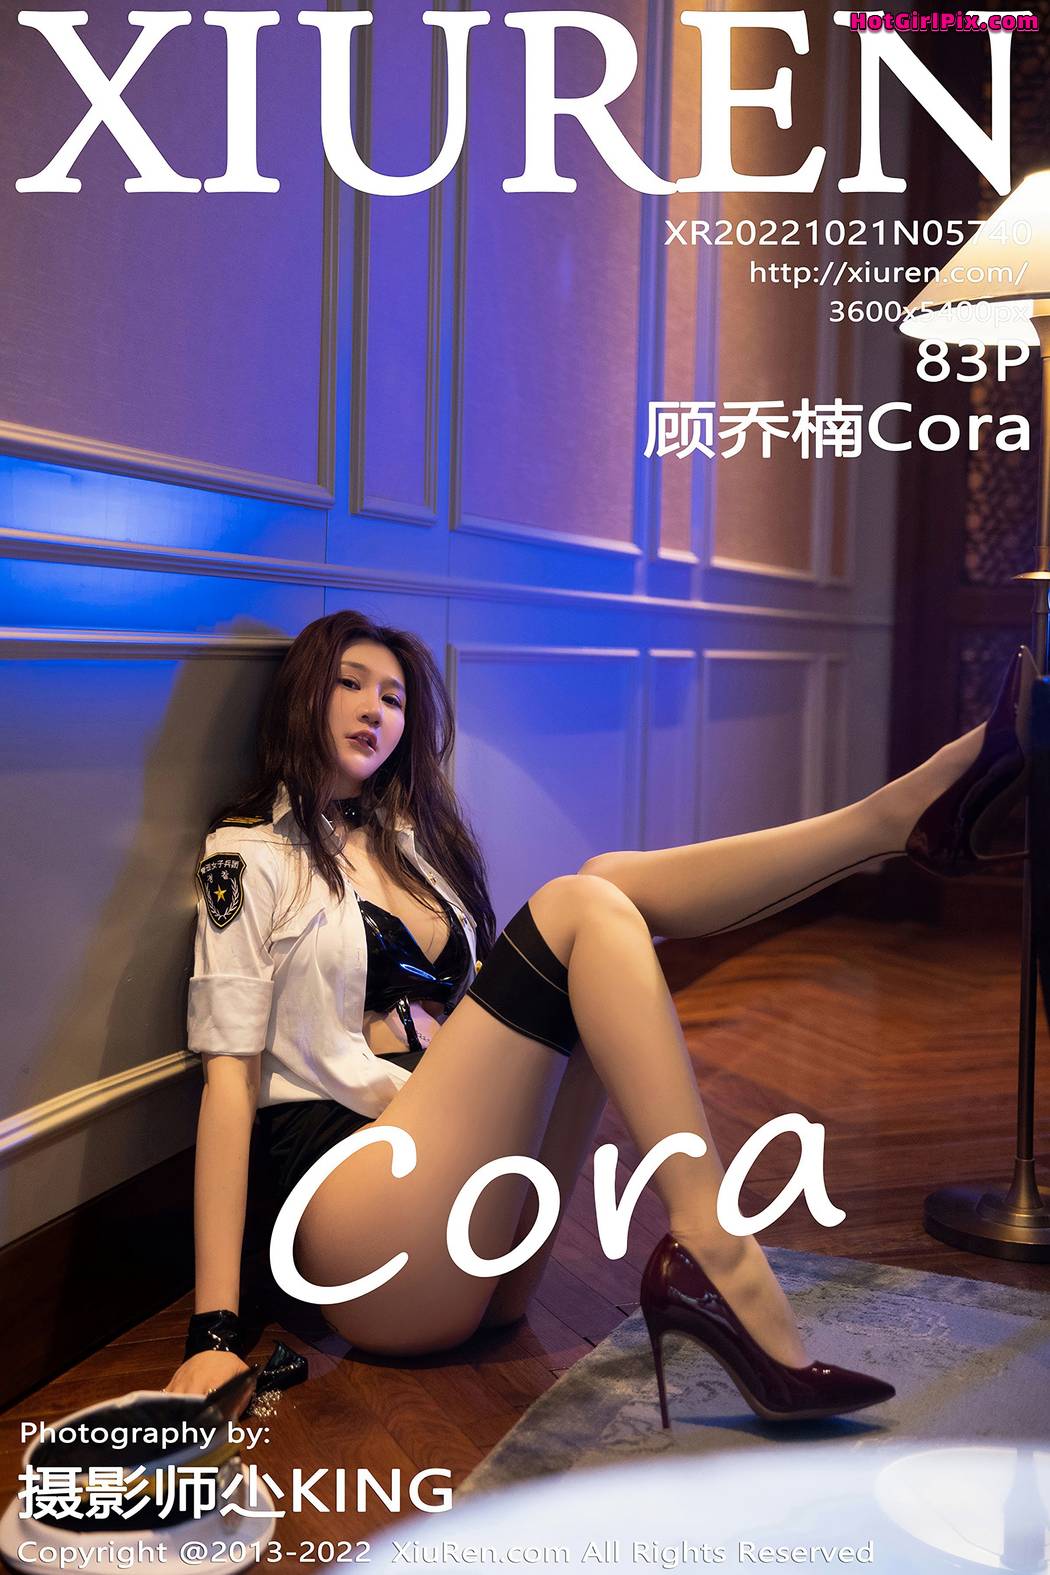 [XIUREN] No.5740 顾乔楠Cora Cover Photo